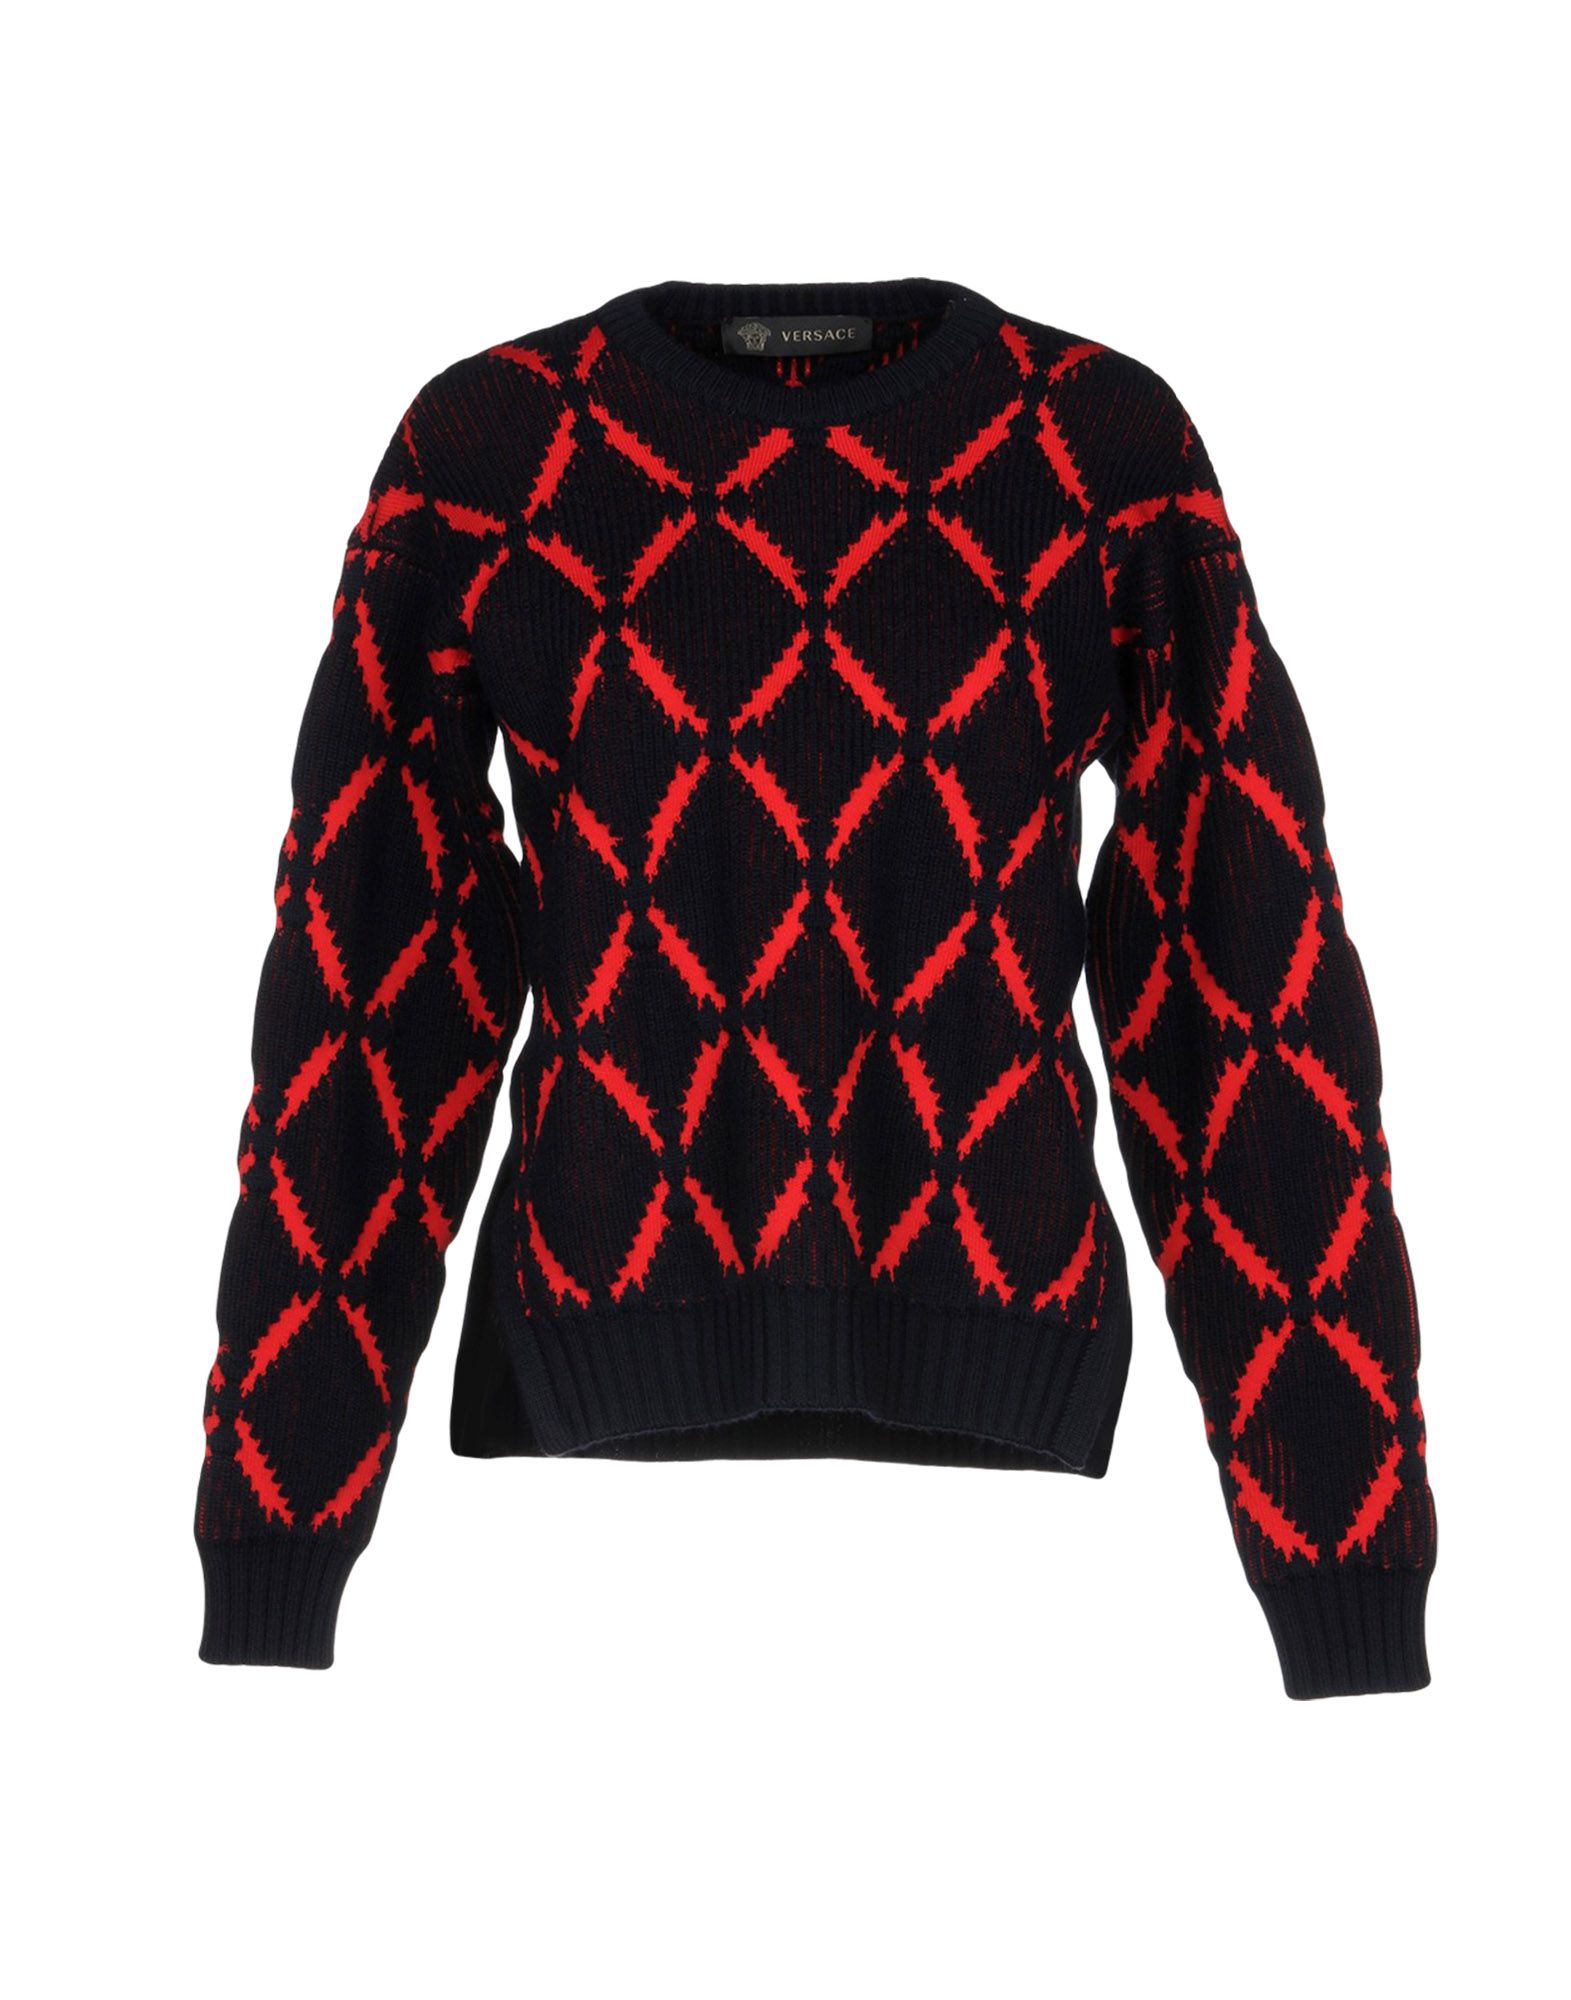 VERSACE Sweater,39857401FP 5